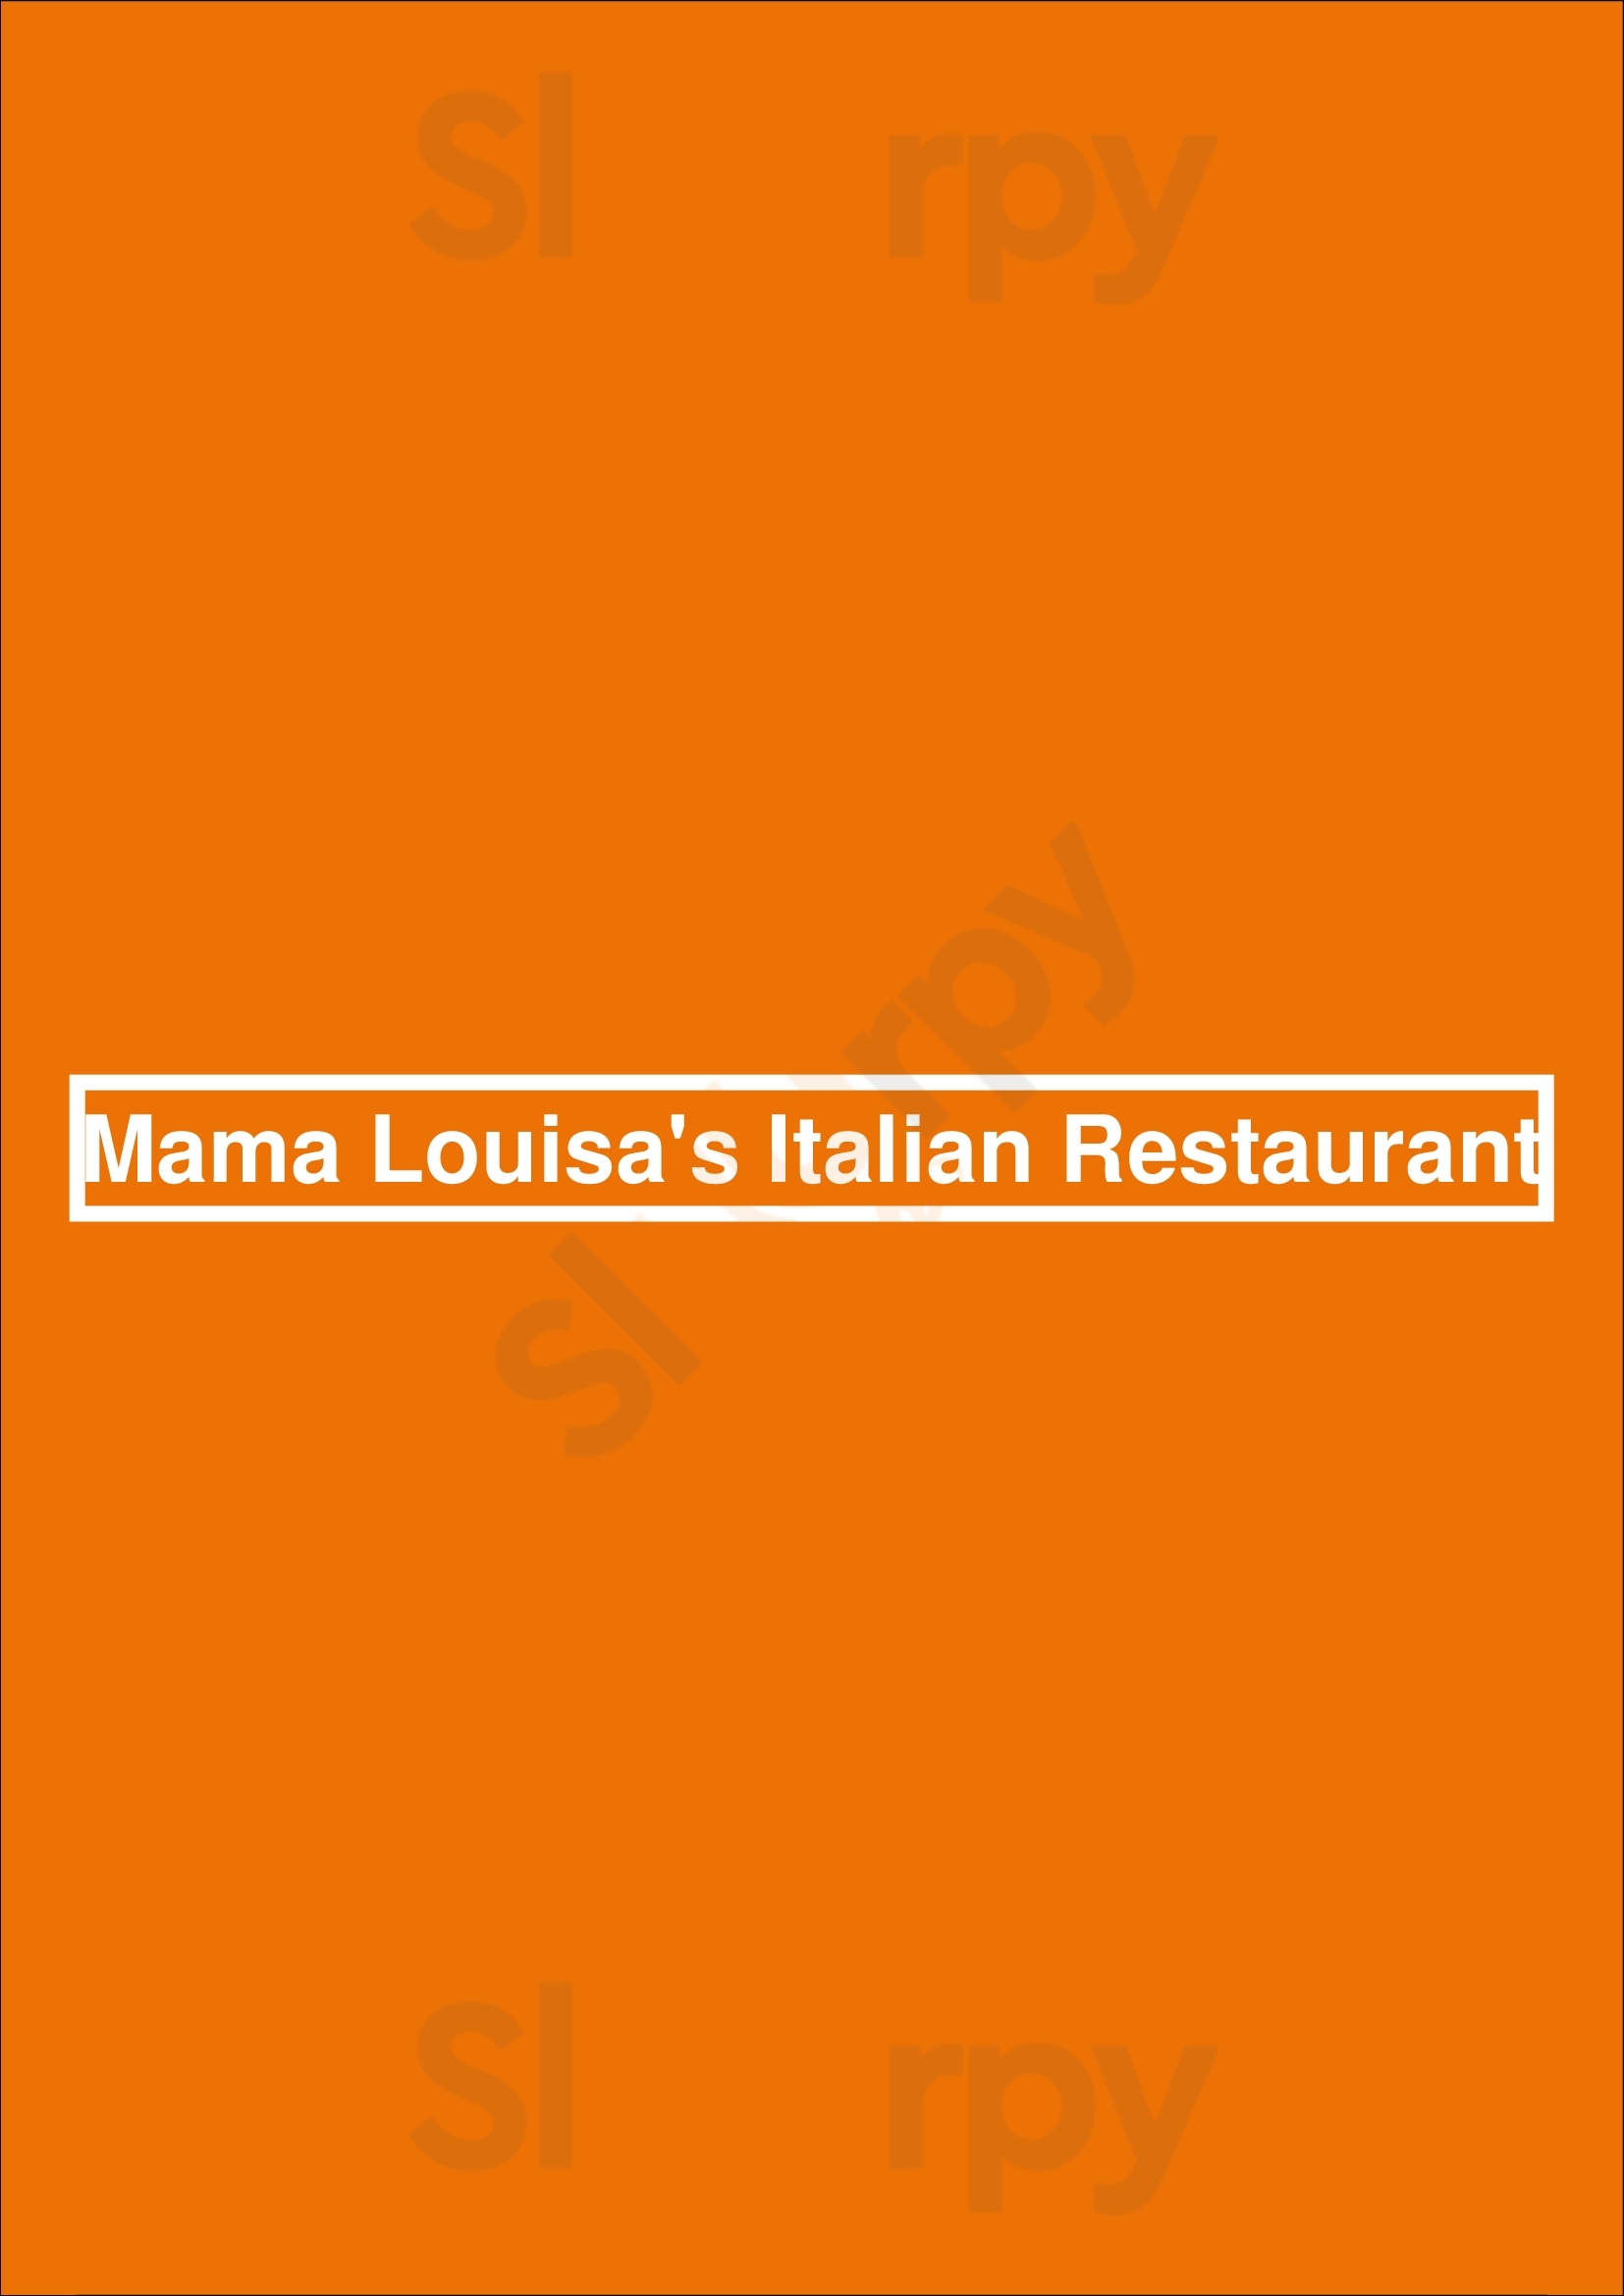 Mama Louisa's Italian Restaurant Tucson Menu - 1